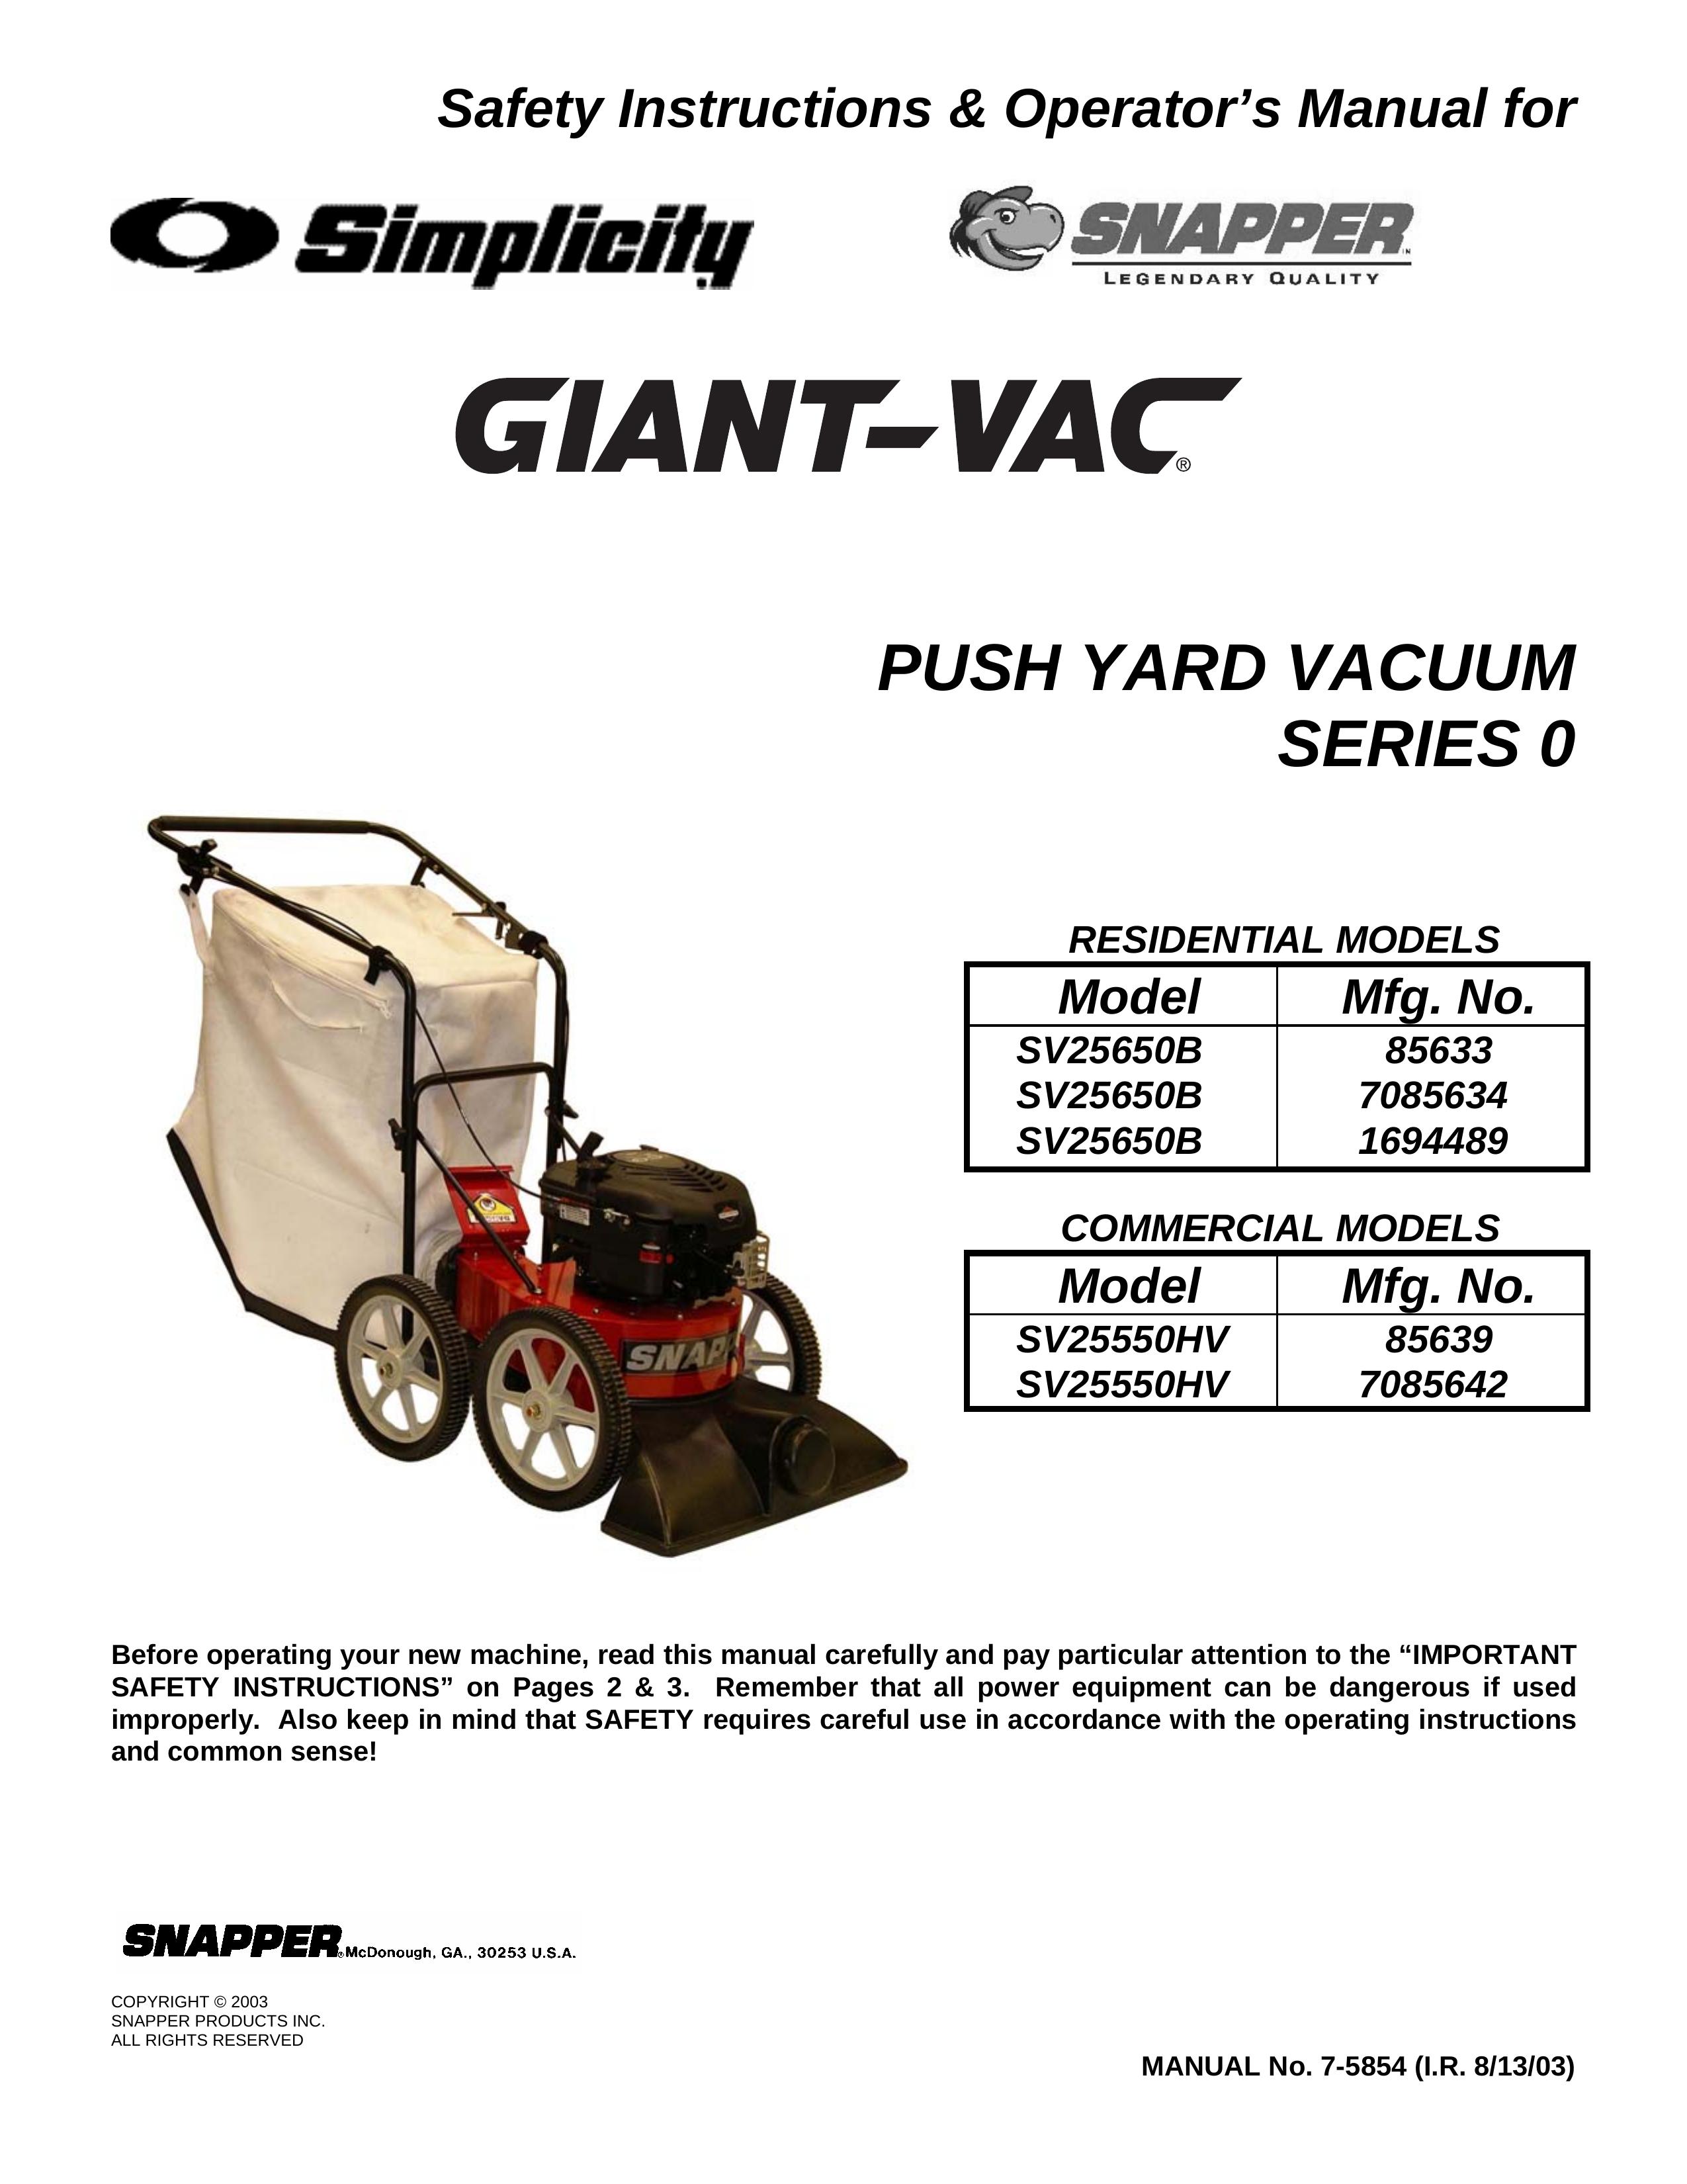 Snapper SV25650B Yard Vacuum User Manual